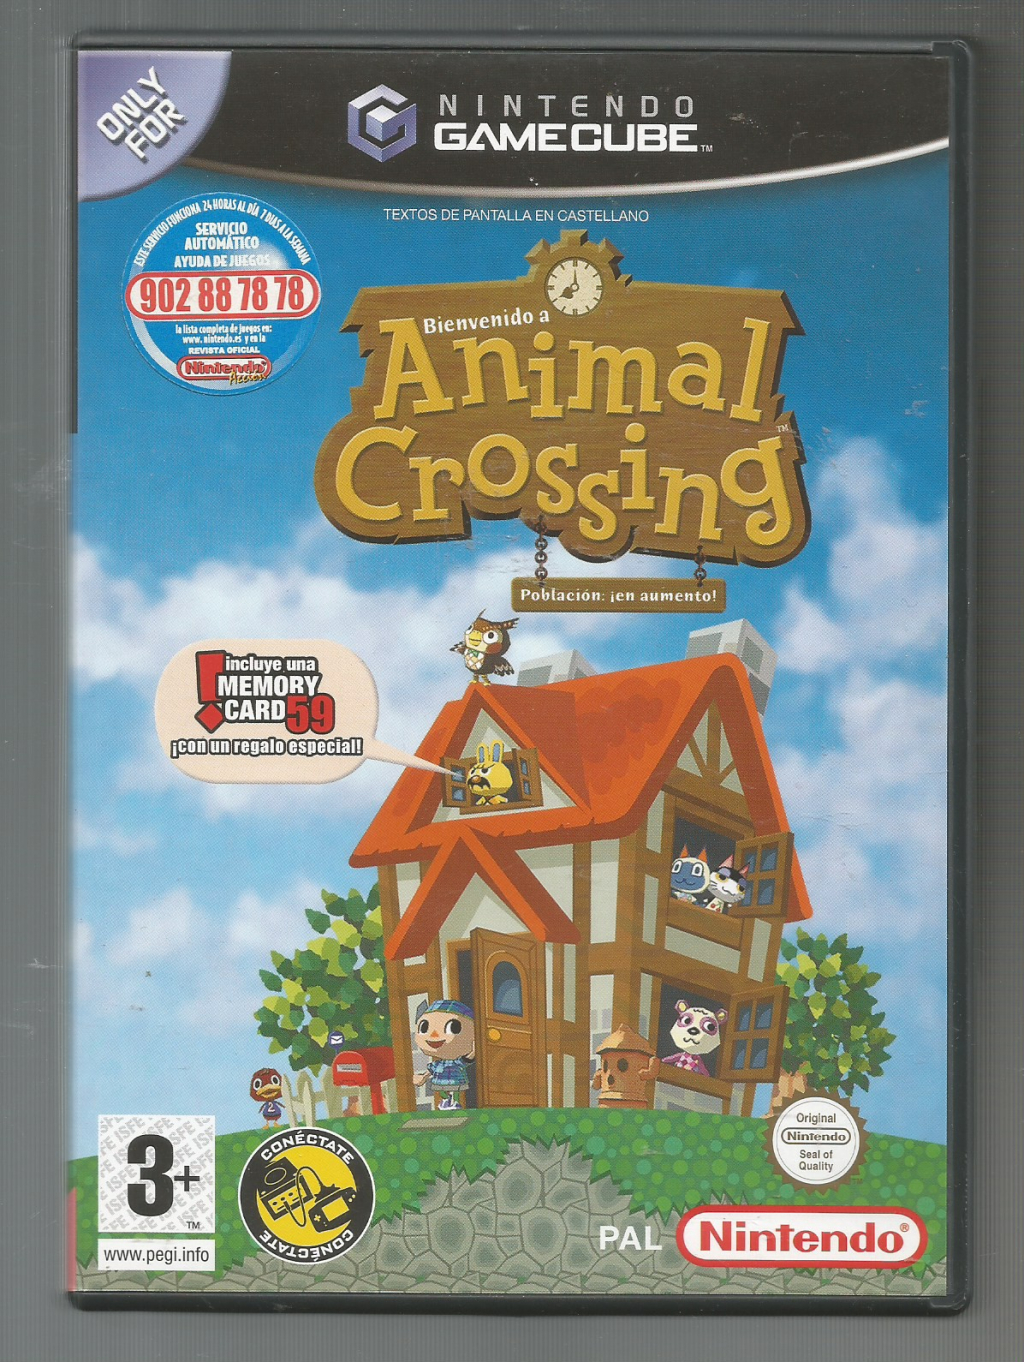 Animal crossing rom. Энимал Кроссинг игра. Animal Crossing GAMECUBE. Animal Crossing обложка. Энимал Кроссинг Нинтендо 64.